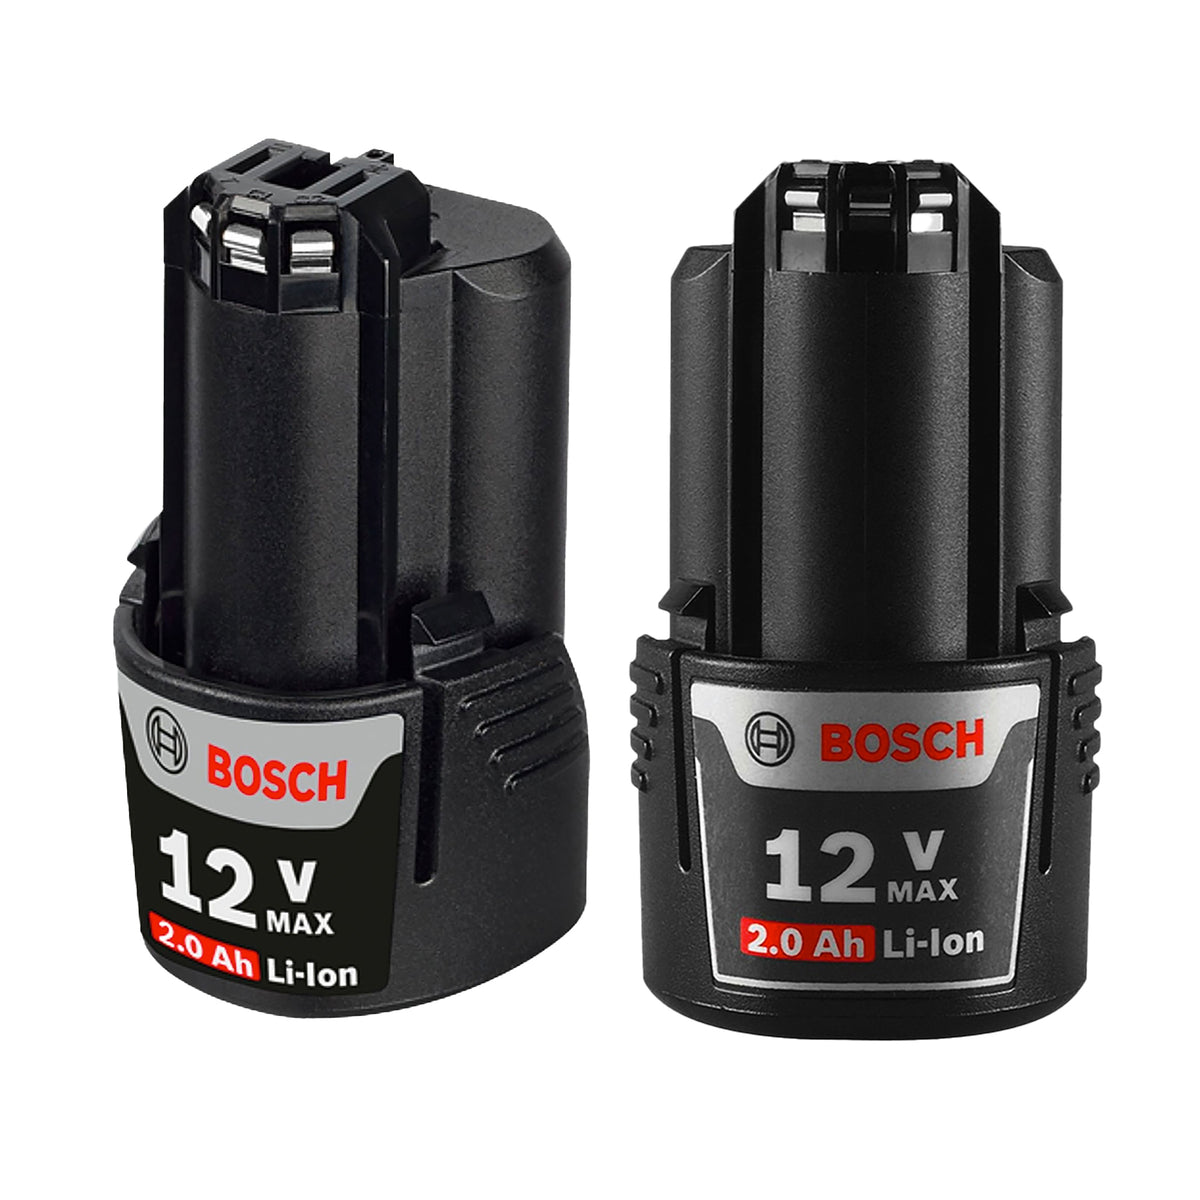 Cargador de batería GAL 12V-20 y 2 Baterías Bosch 12V 2,0Ah – FERREKUPER